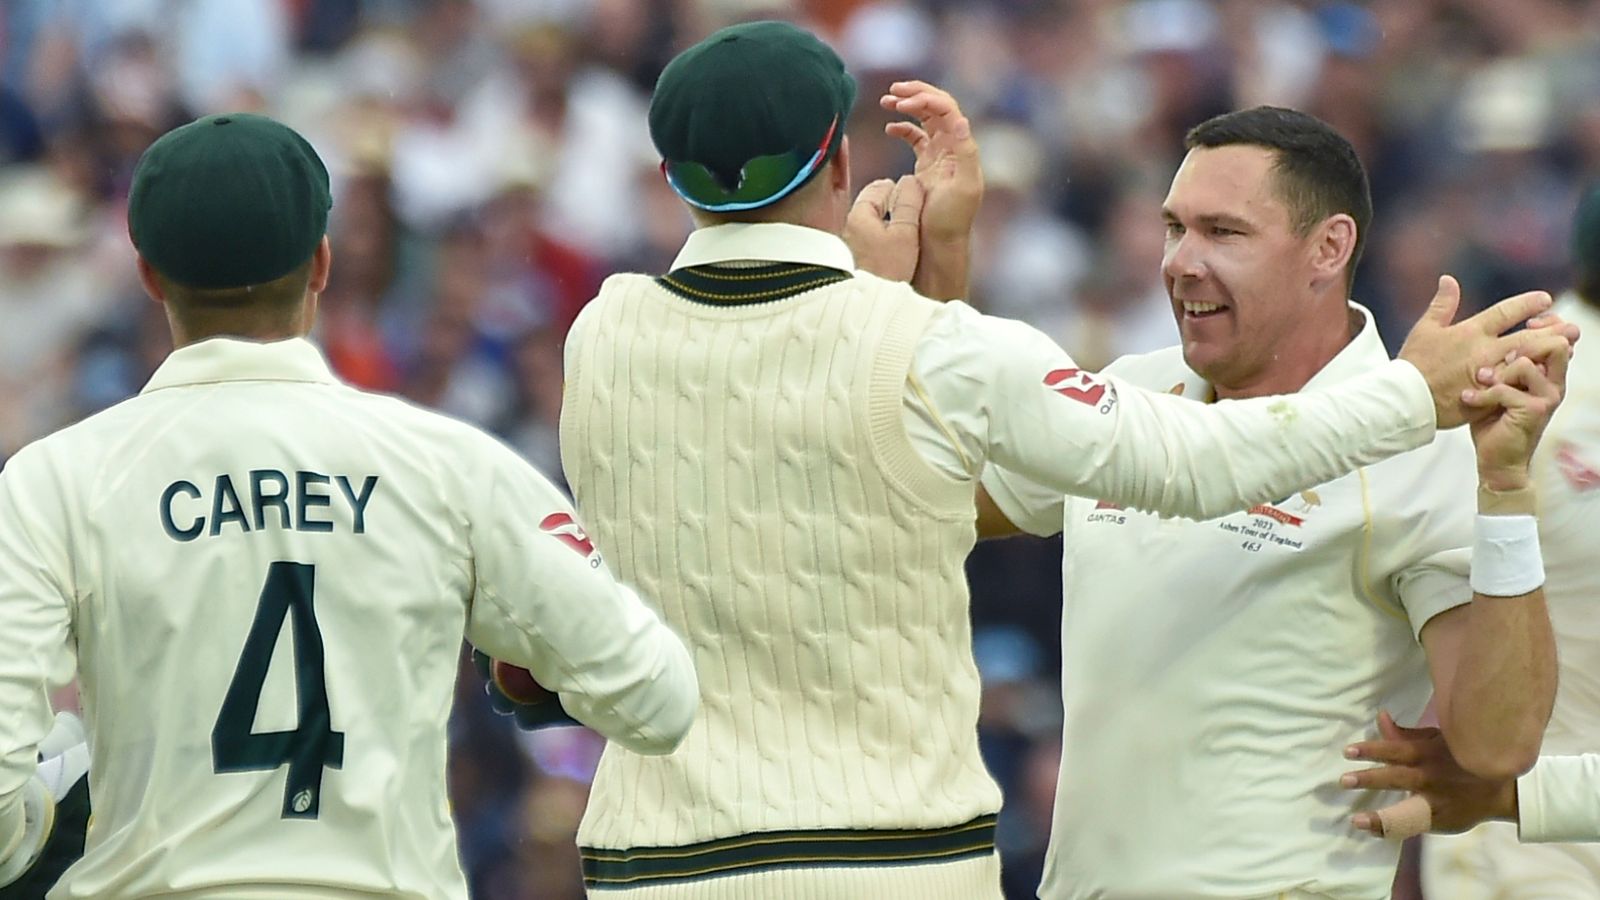 The Ashes: First England vs Australia Menguji keseimbangan saat para turis melepaskan bola di hari ketiga yang dilanda hujan |  Berita kriket